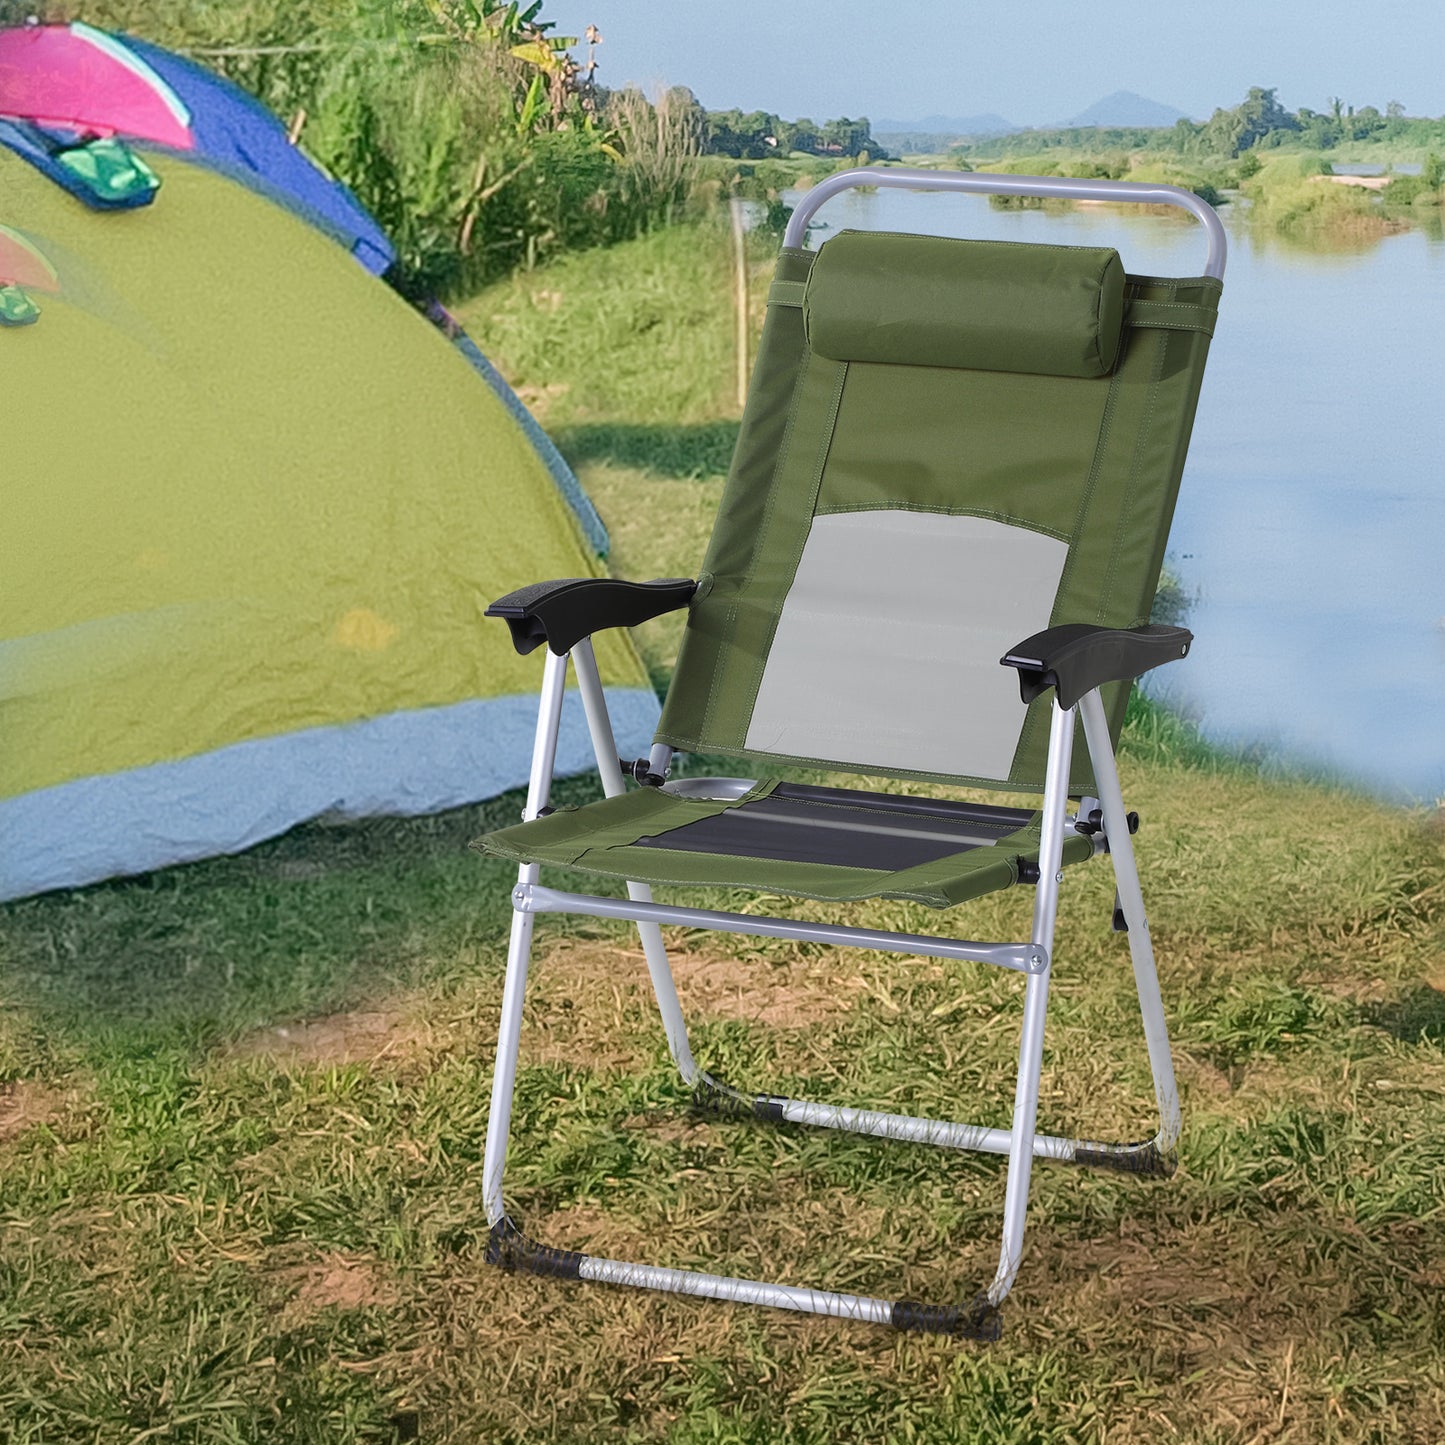 Outsunny Metal Frame 3-Position Adjustable Outdoor Garden Chair w/ Headrest Green